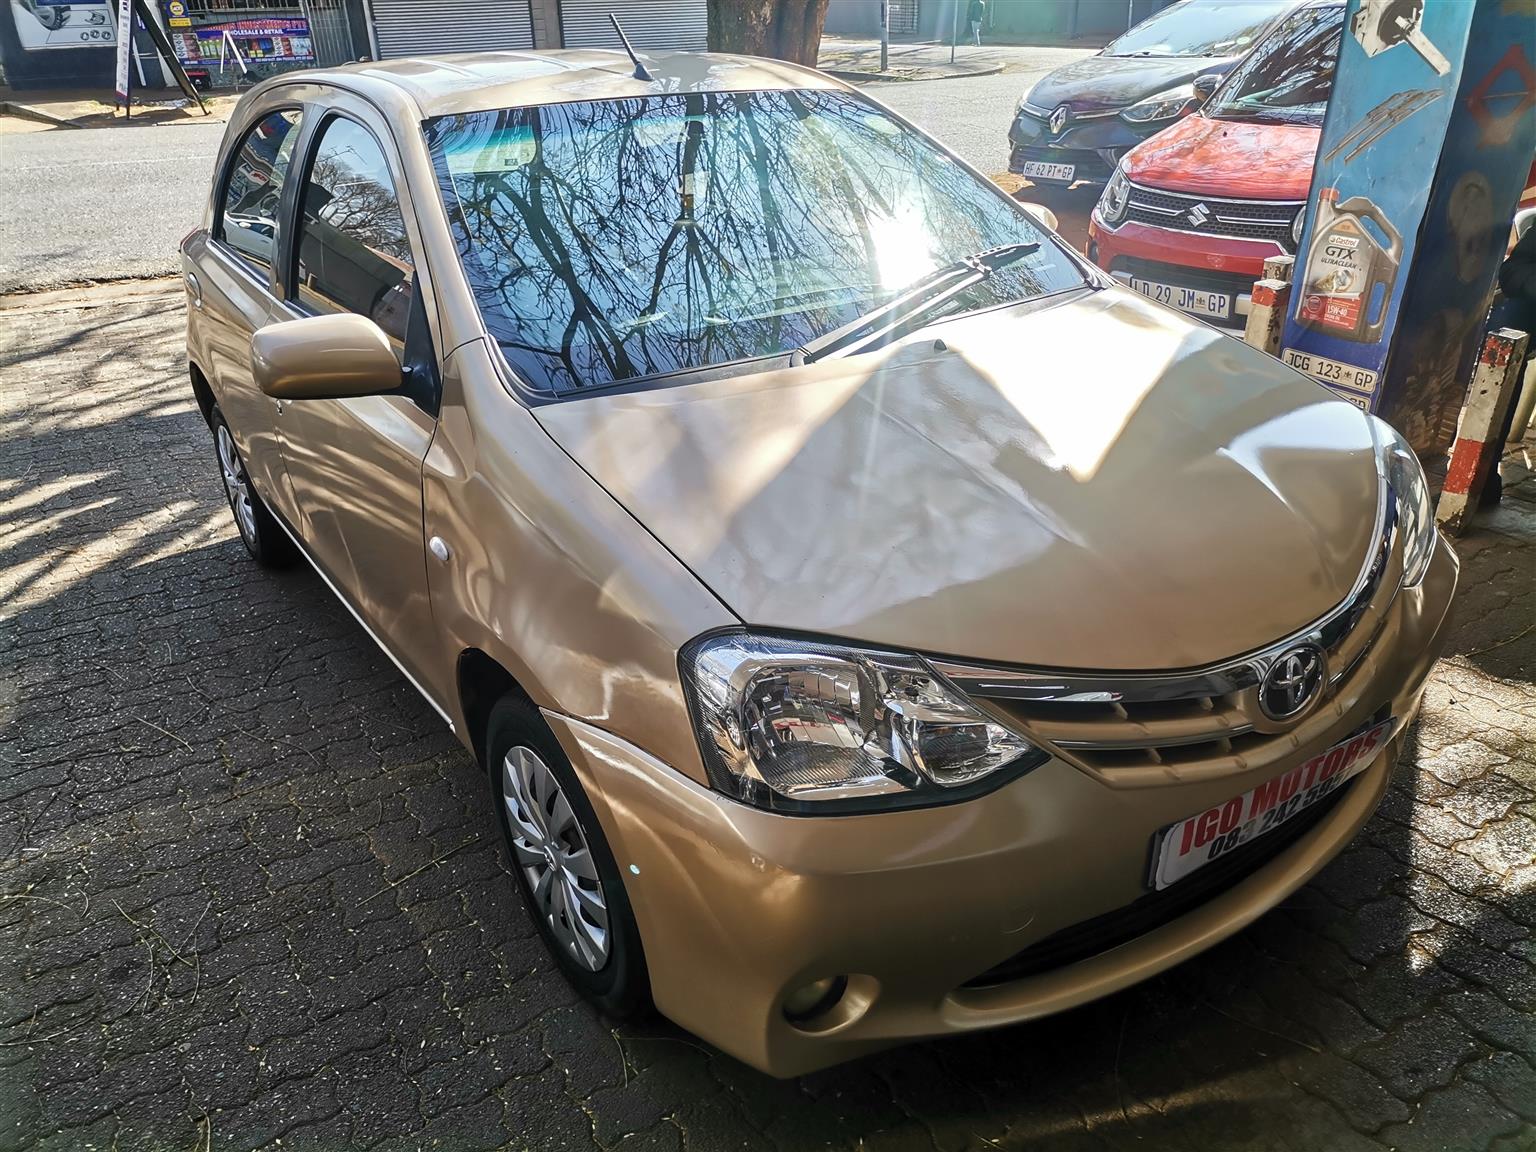 Used Toyota Etios Cross 1.4 VD car in Malleshwaram, Bangalore for 5.41 Lakh  - Product ID 10534238 | Spinny